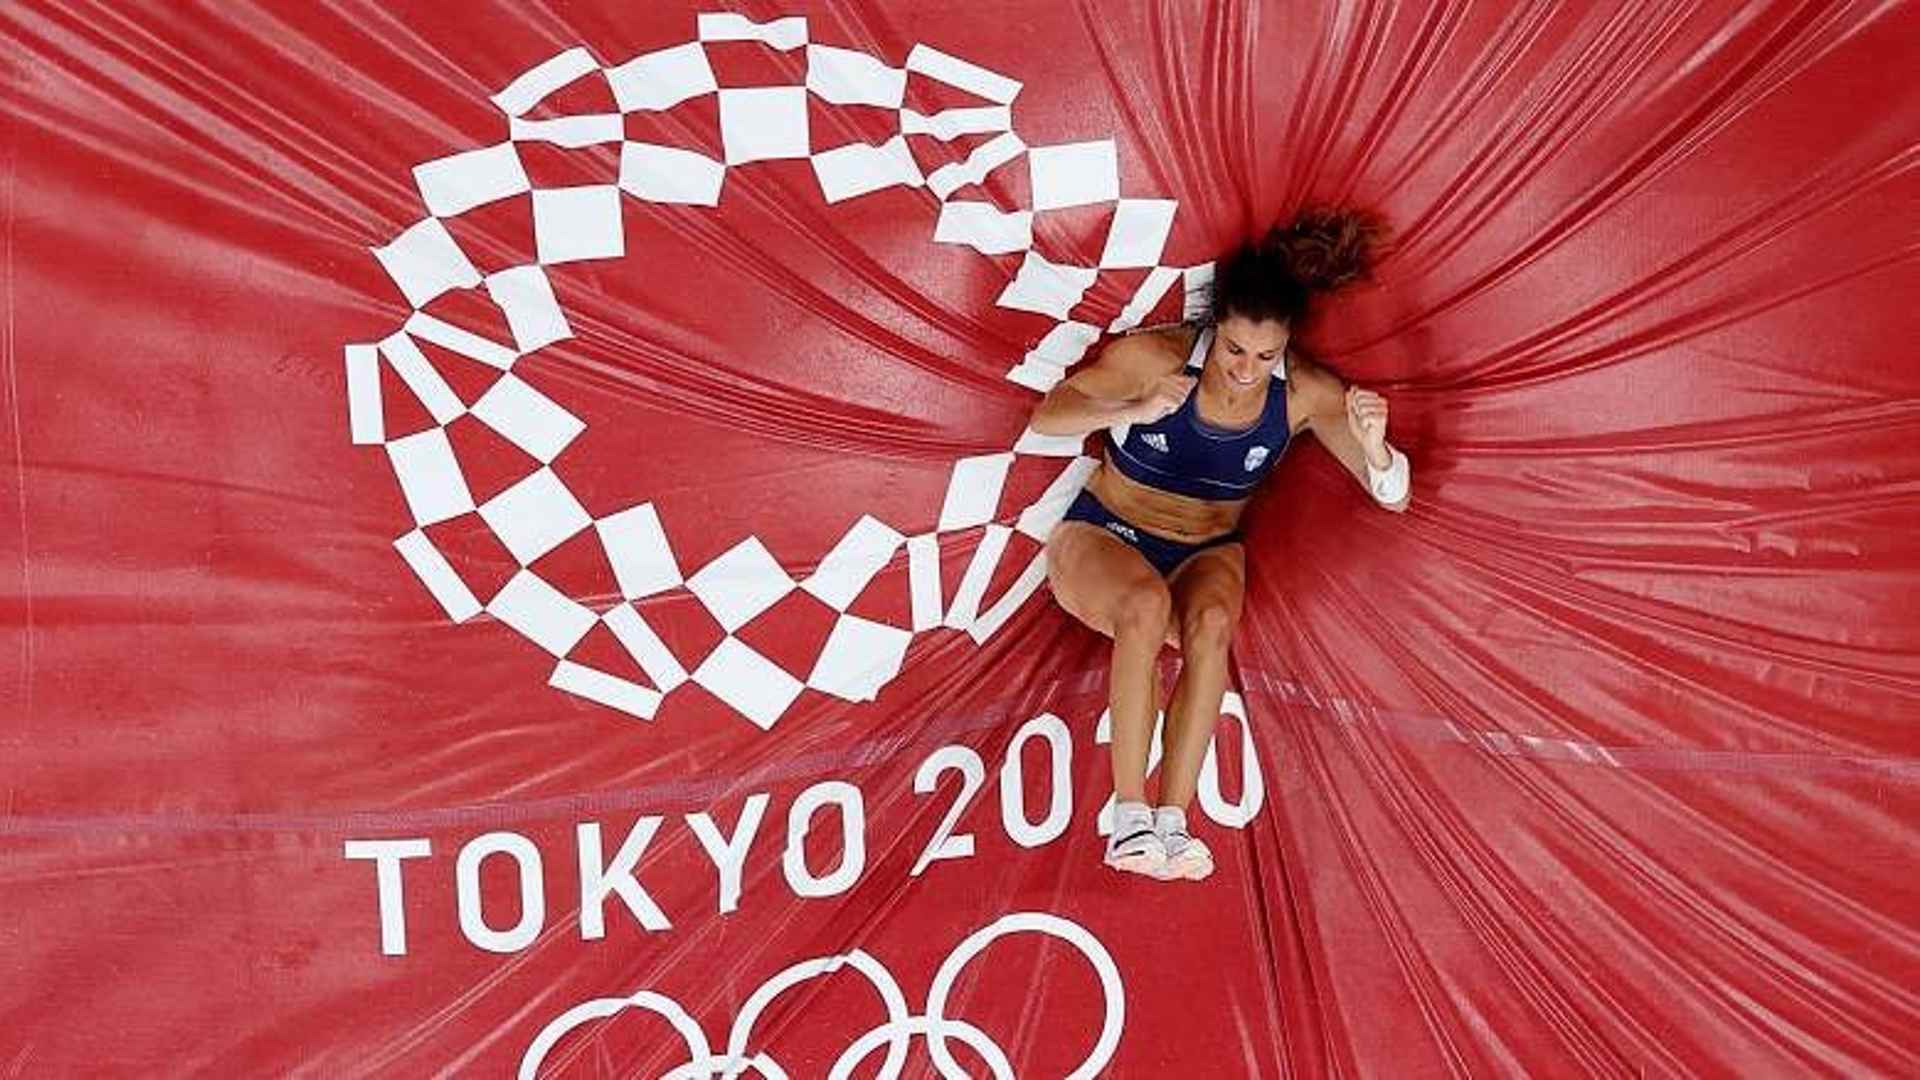 Katerina Stefanidi in action during the Tokyo Olympics 2020 (Image Credits - Instagram/ @stefanidi_katerina)